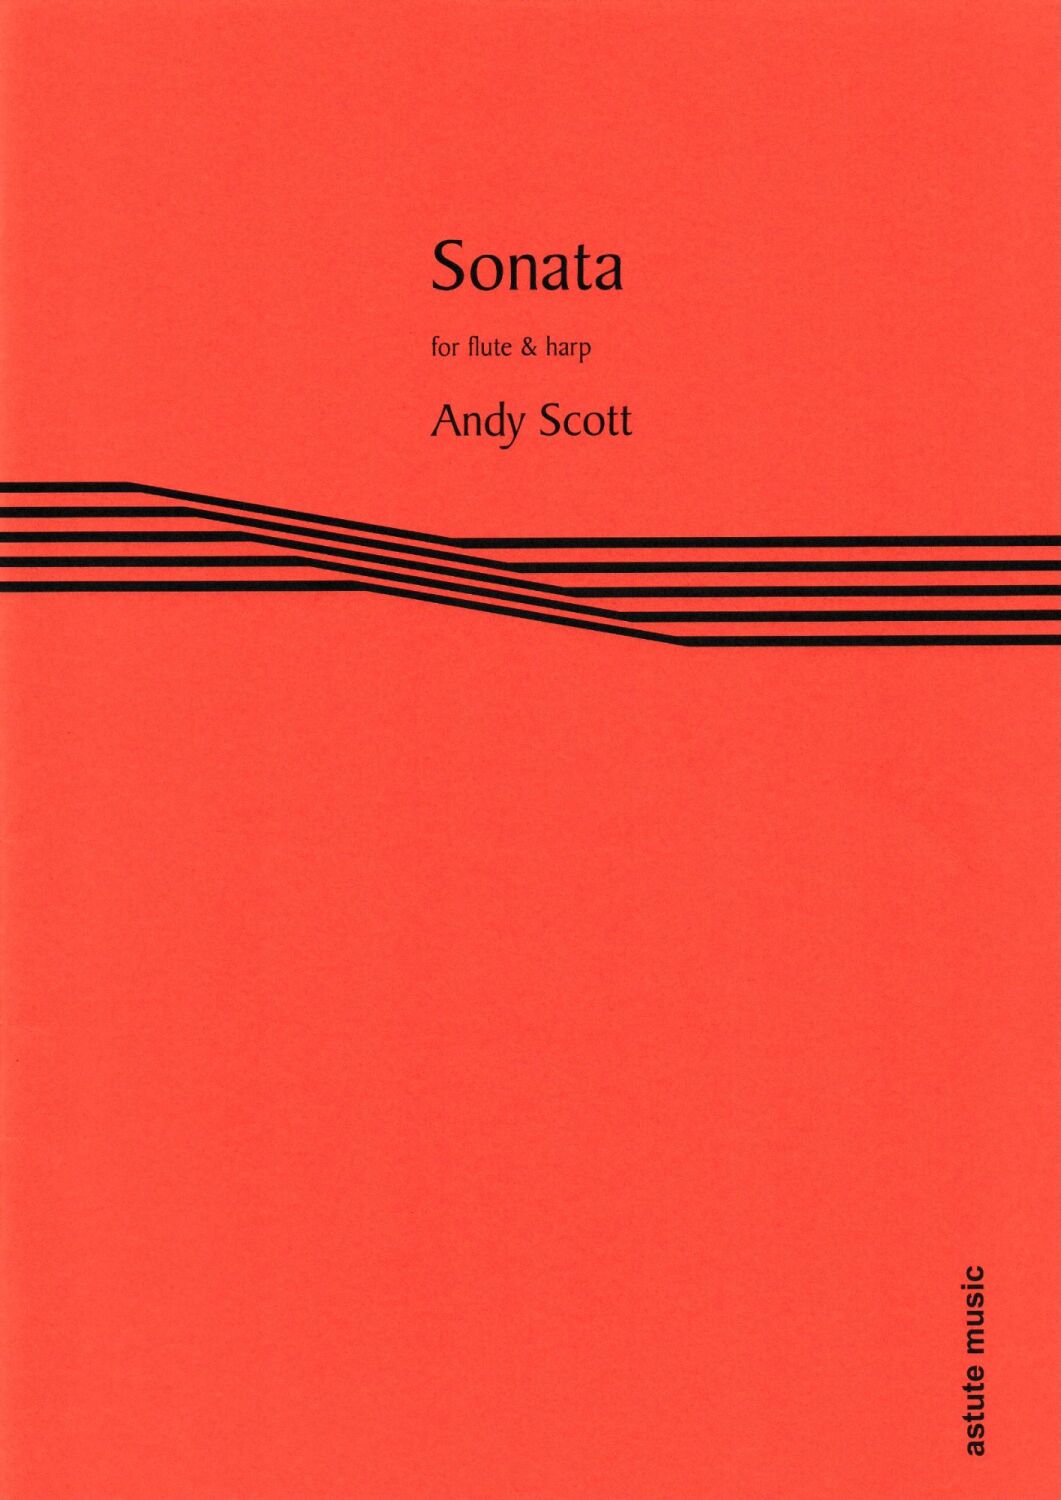 Sonata for Flute & Harp - Andy Scott (Digital)